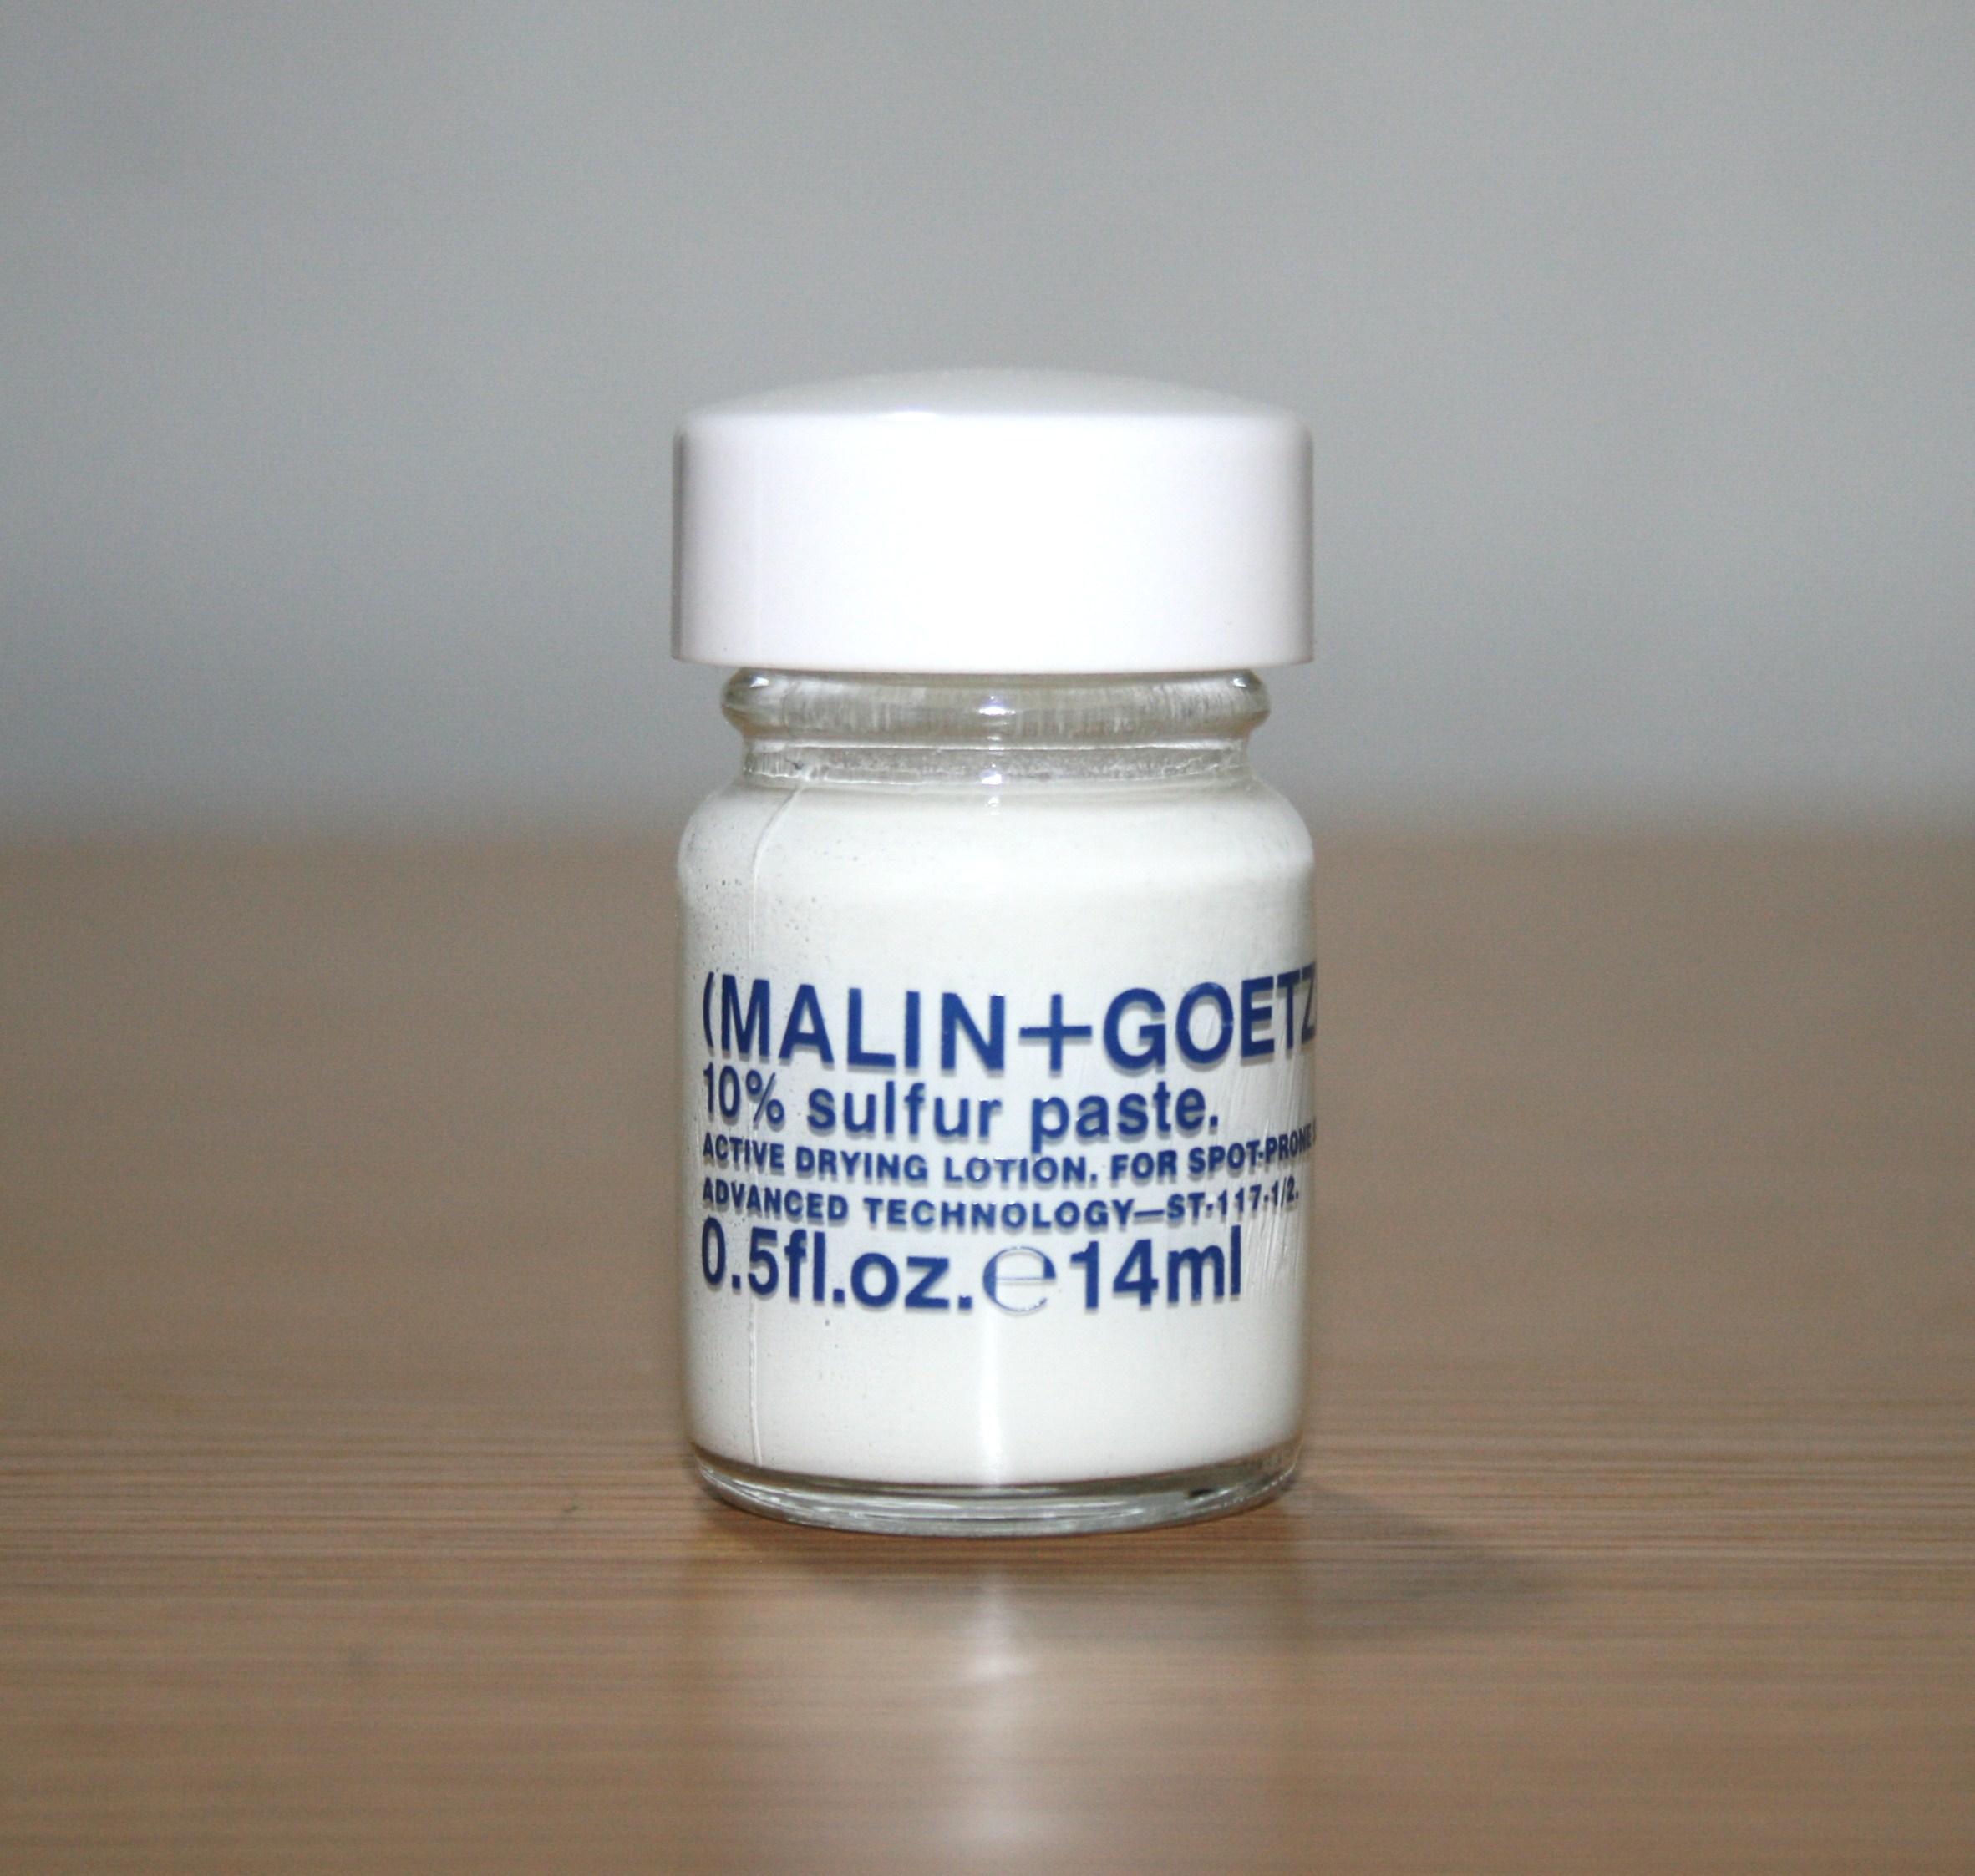 Quick Pick Tuesday: Malin + Goetz 10% Sulfur Paste